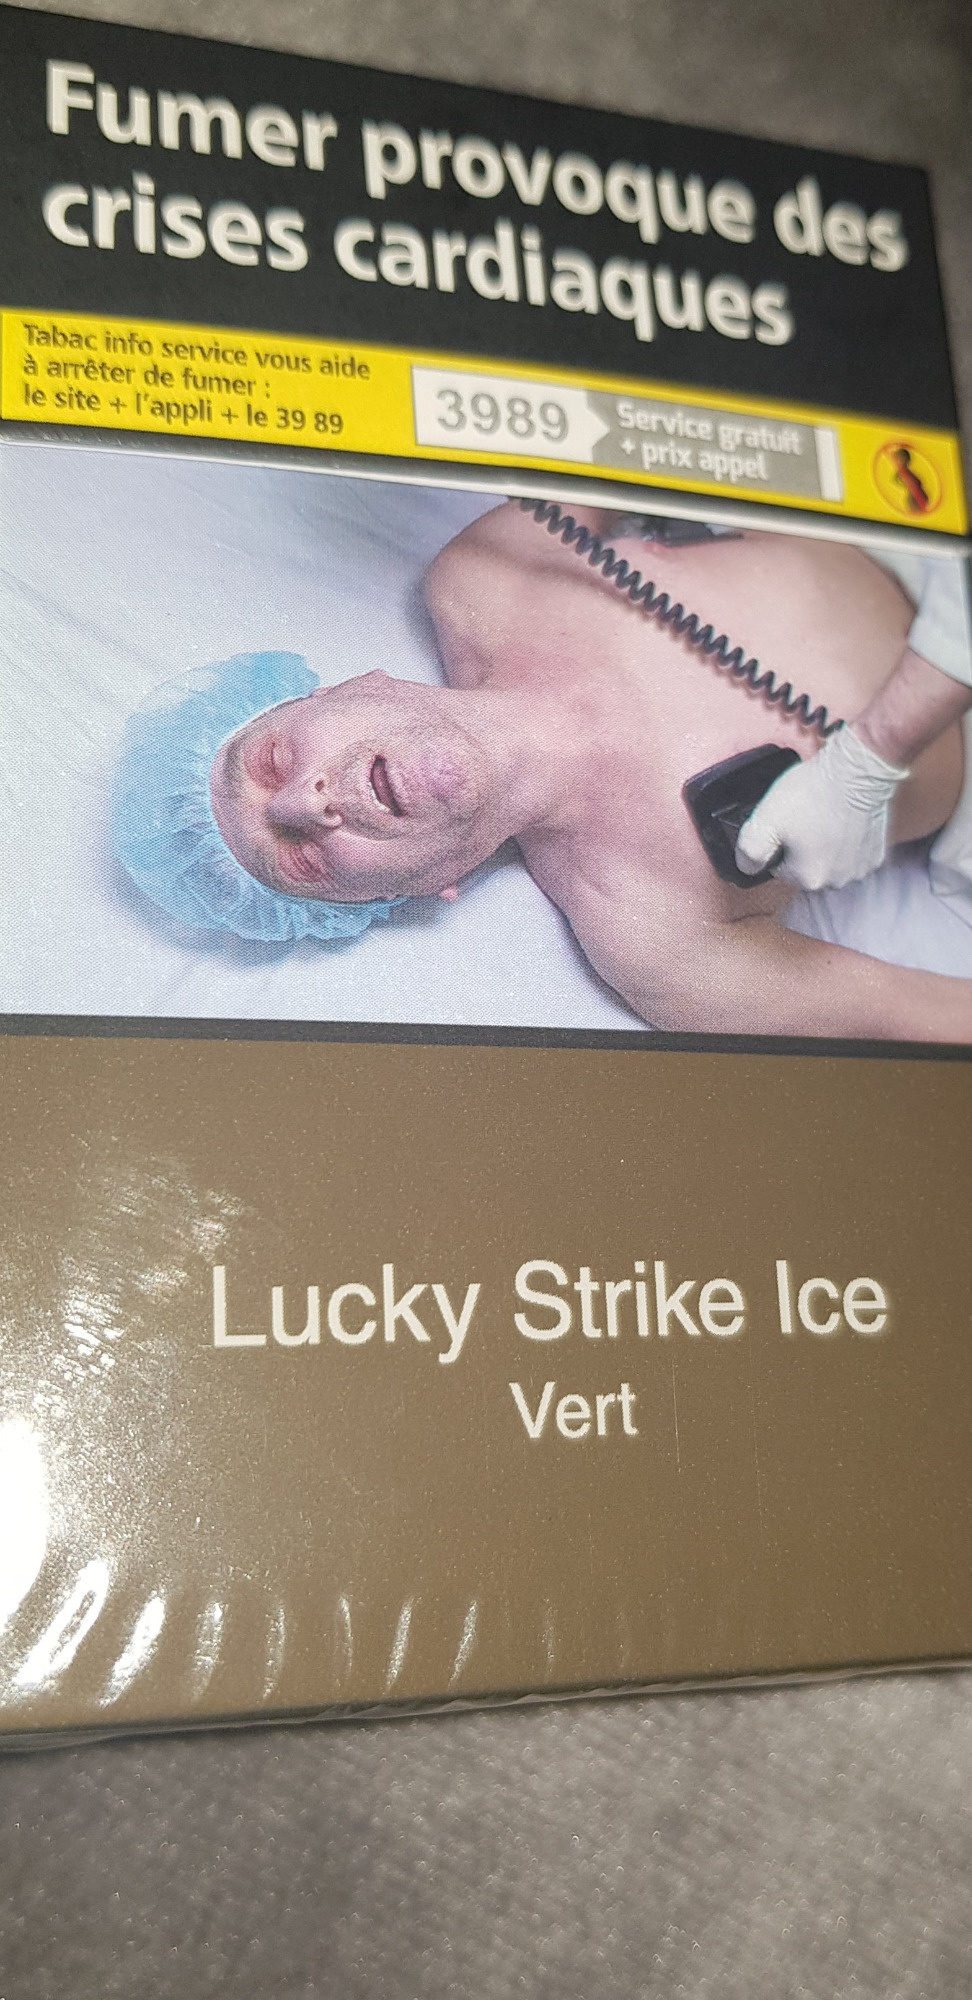 Lucky strick ice vert - Product - fr